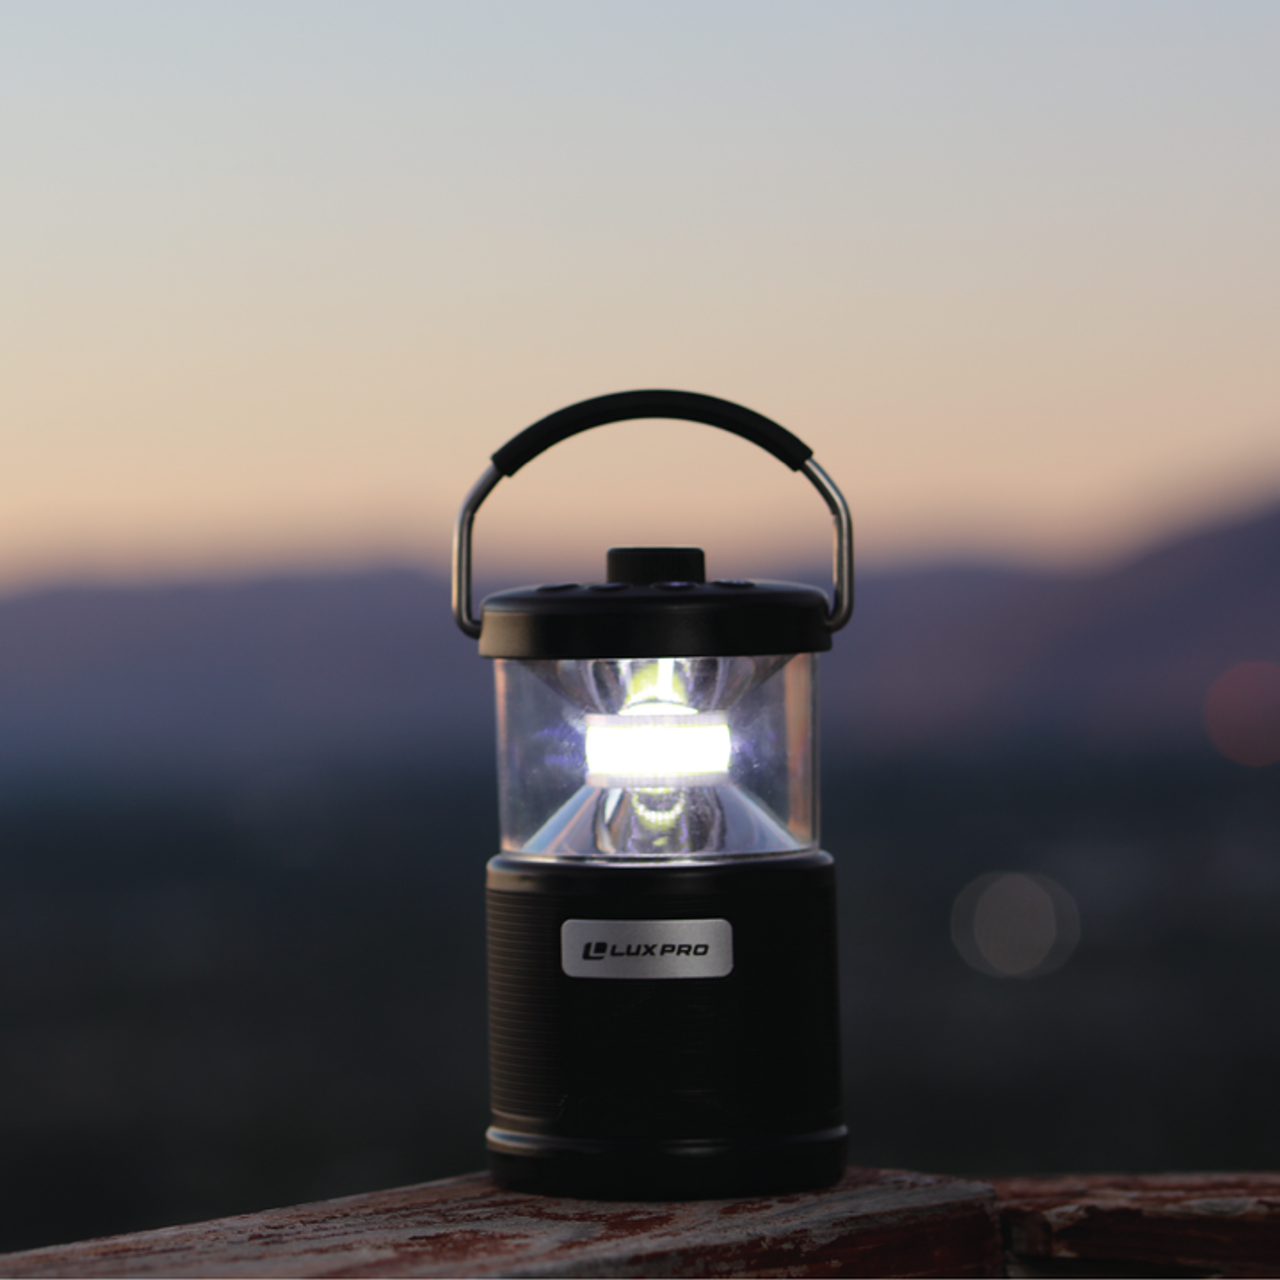 Lux-Pro LP1530 Rechargeable 572 Lumen Lantern with Bluetooth Speaker